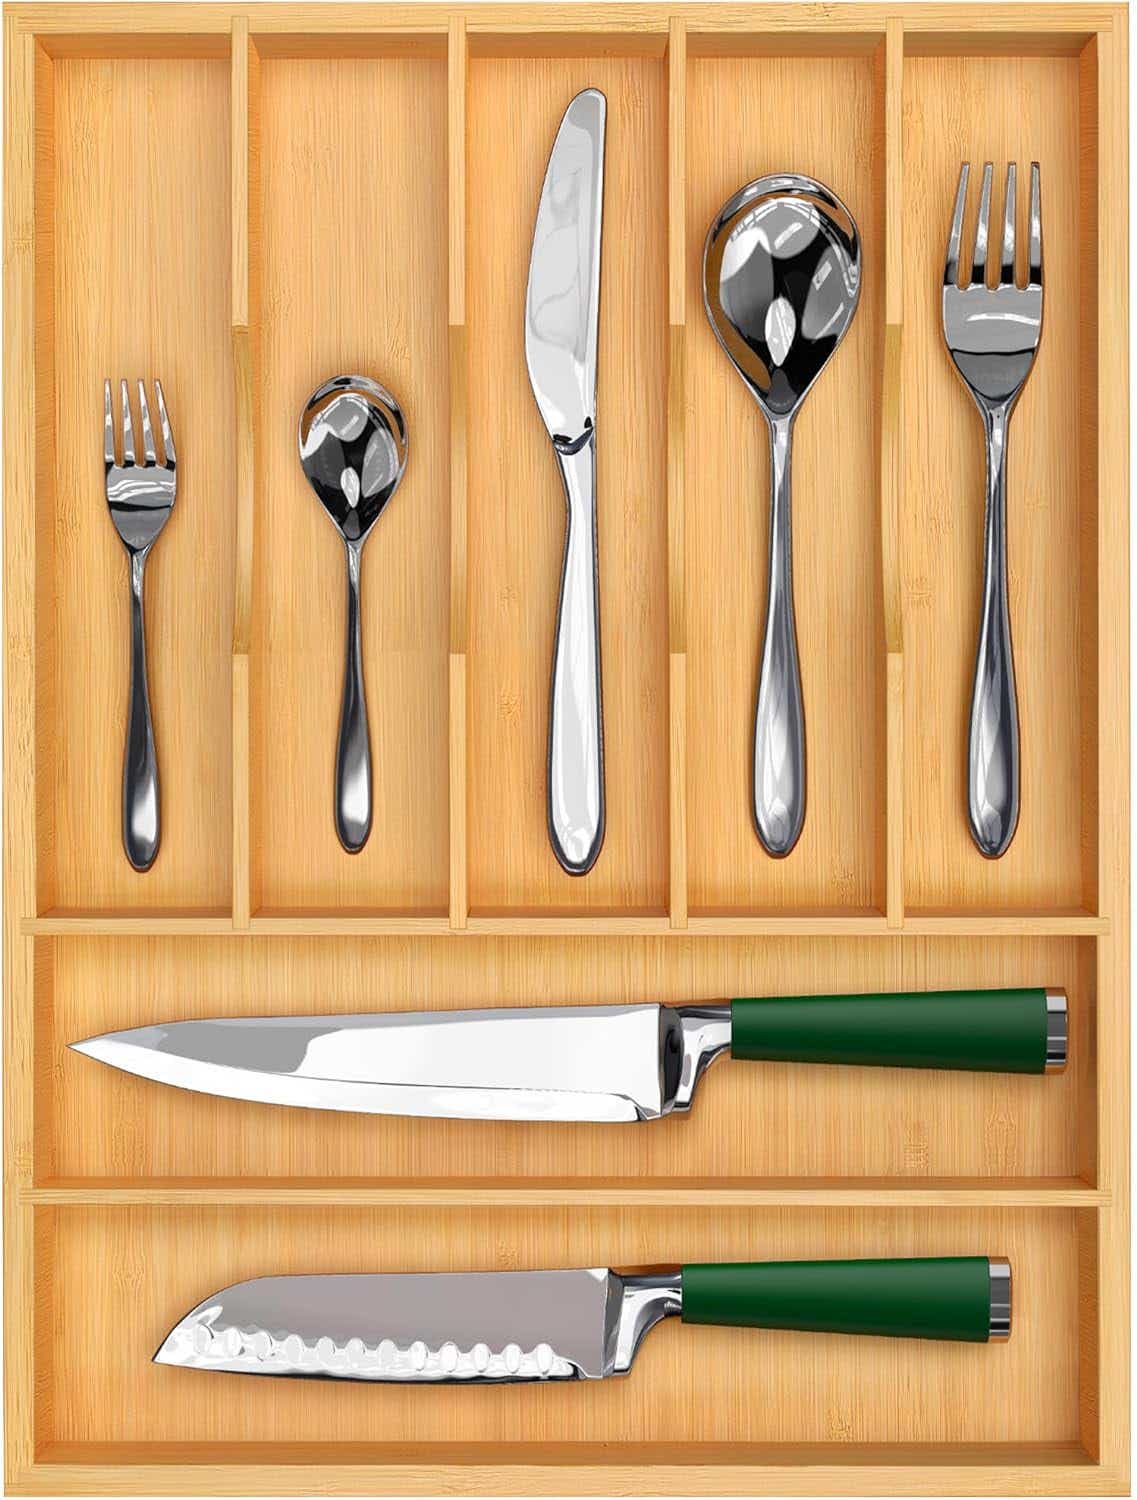 Zulay Kitchen on Instagram: The Zulay Teakwood Utensil Set offers